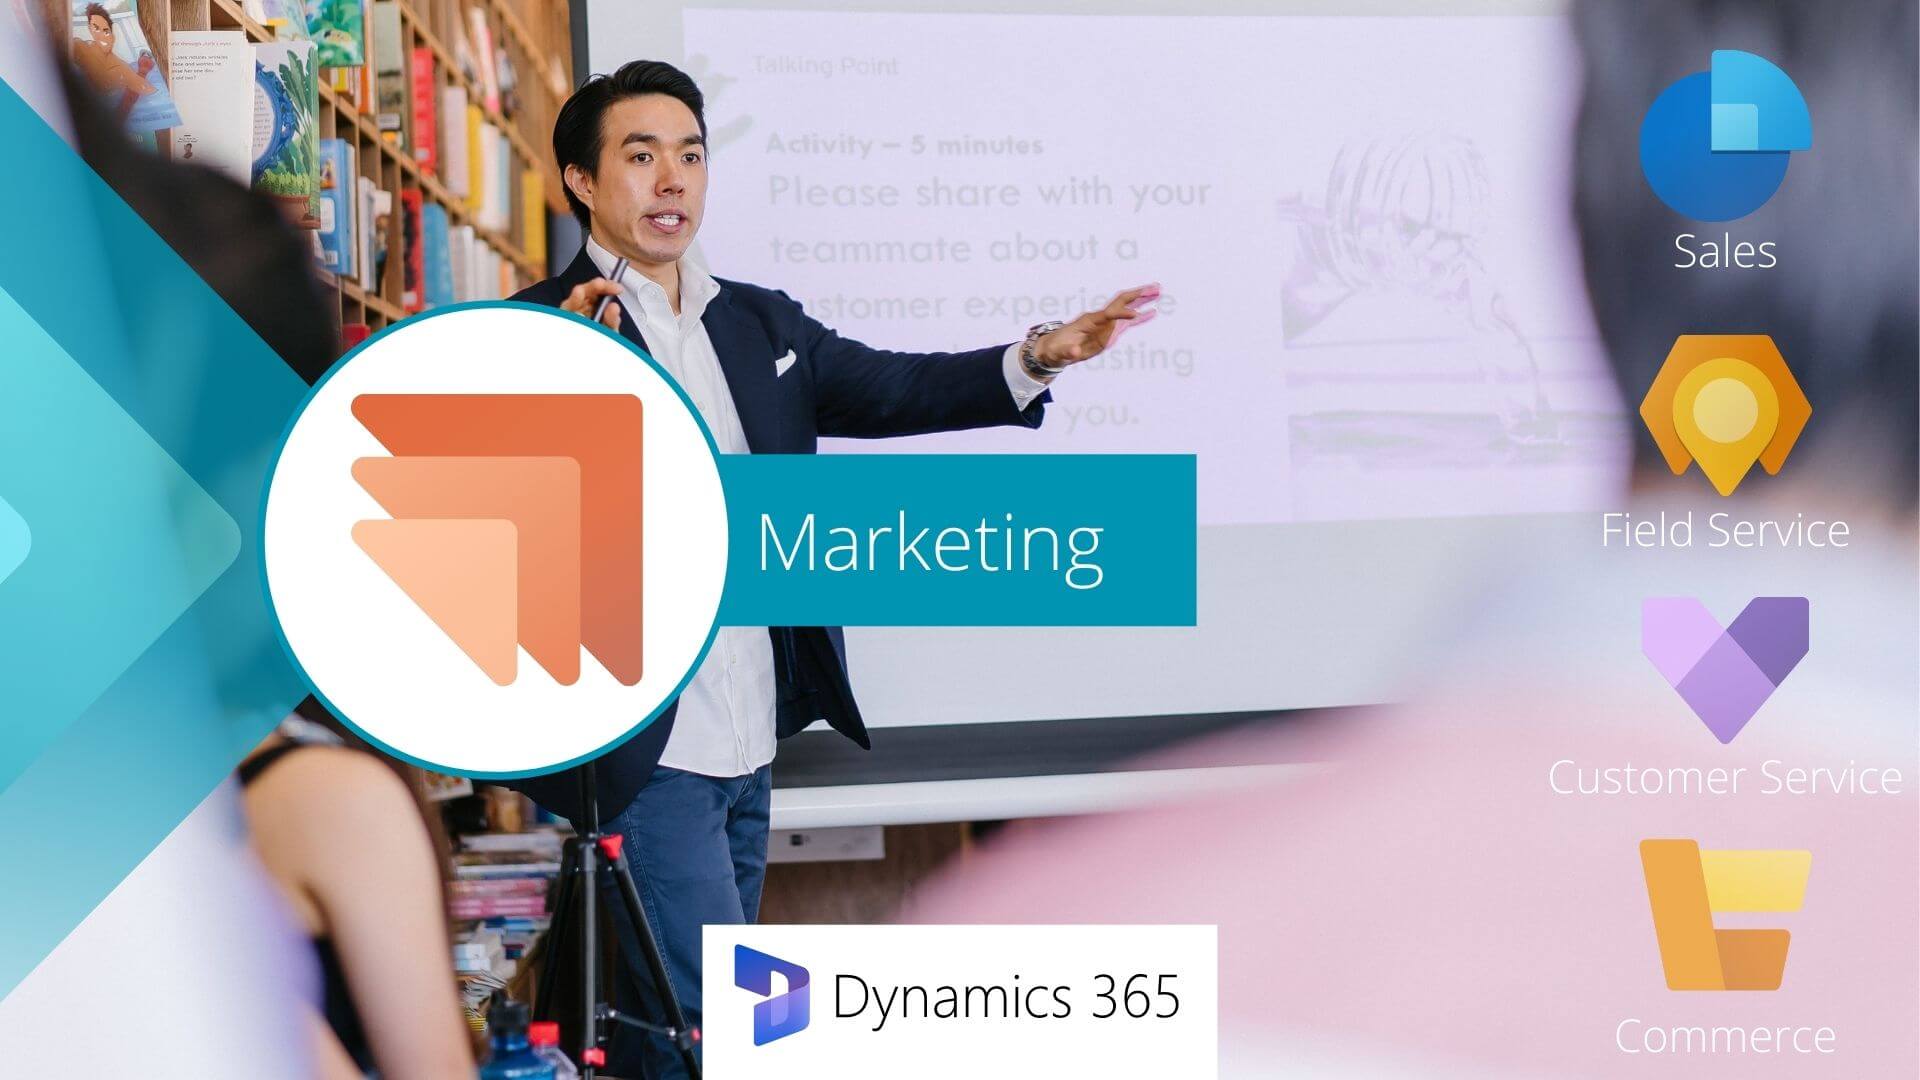 Dynamics 365 Marketing (1)